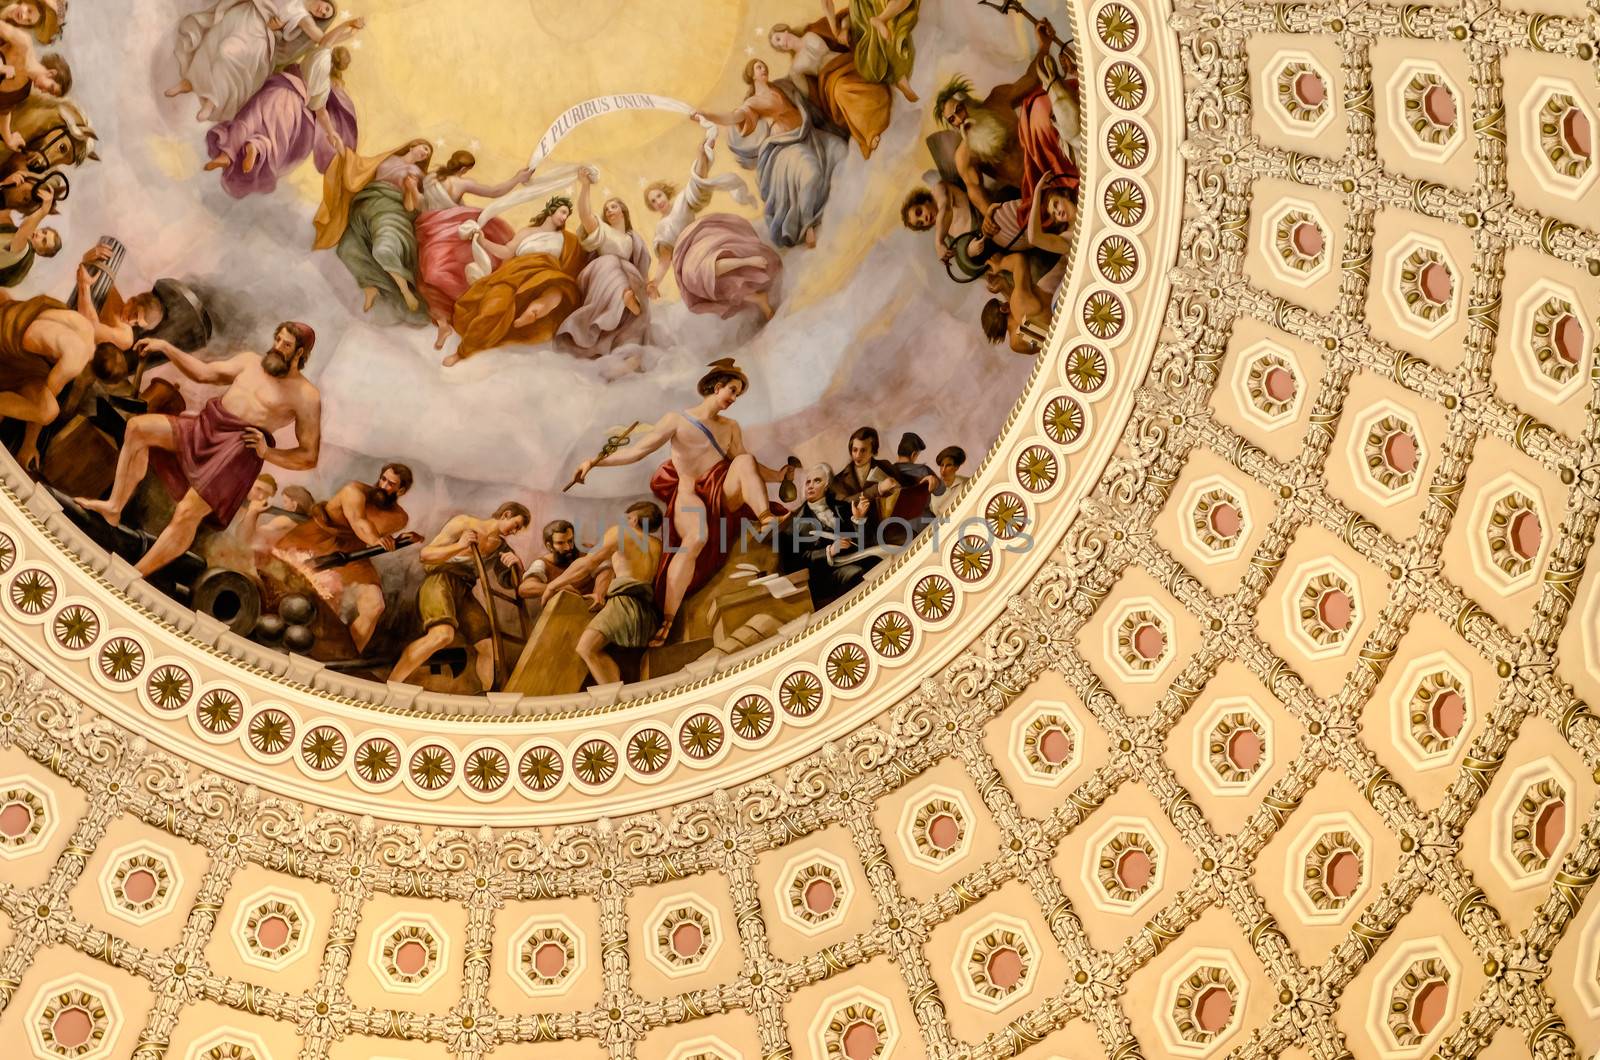 US Capitol Rotunda, detail of the interior decoration